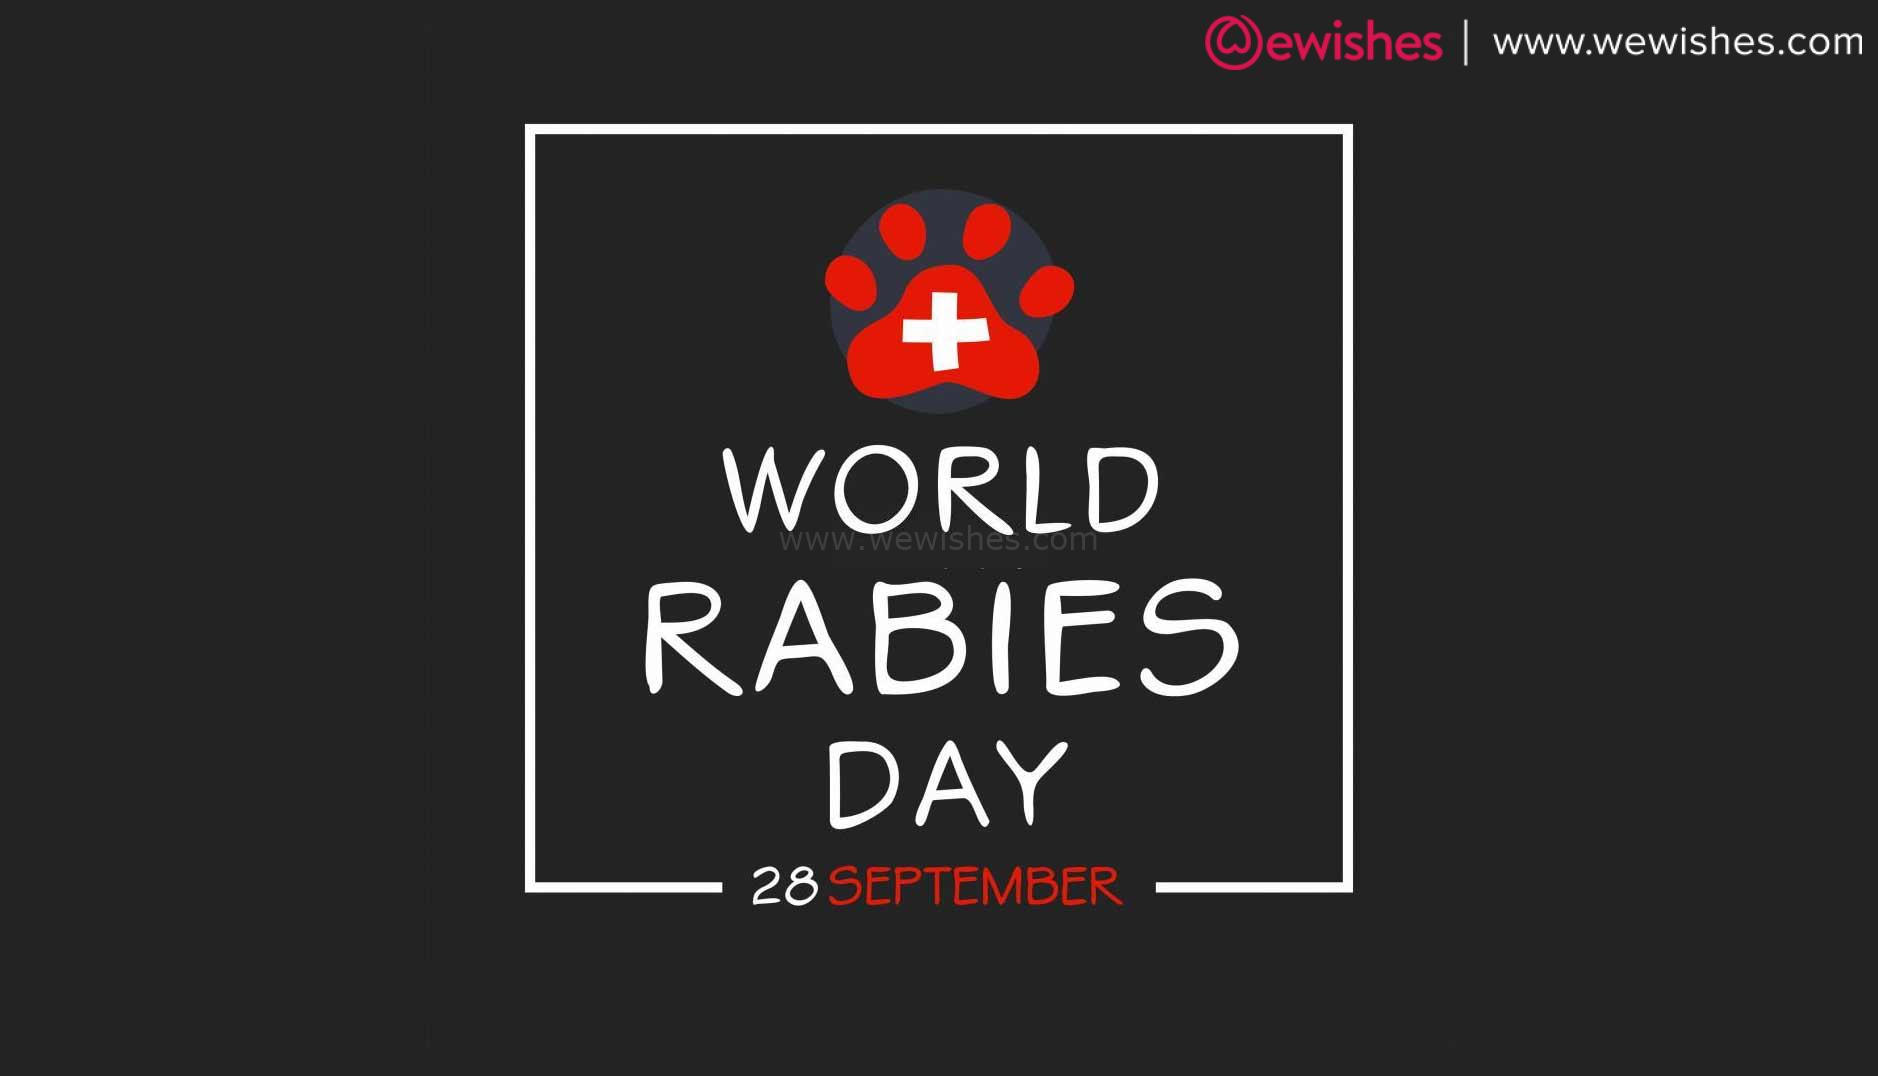 Happy World Rabies Day